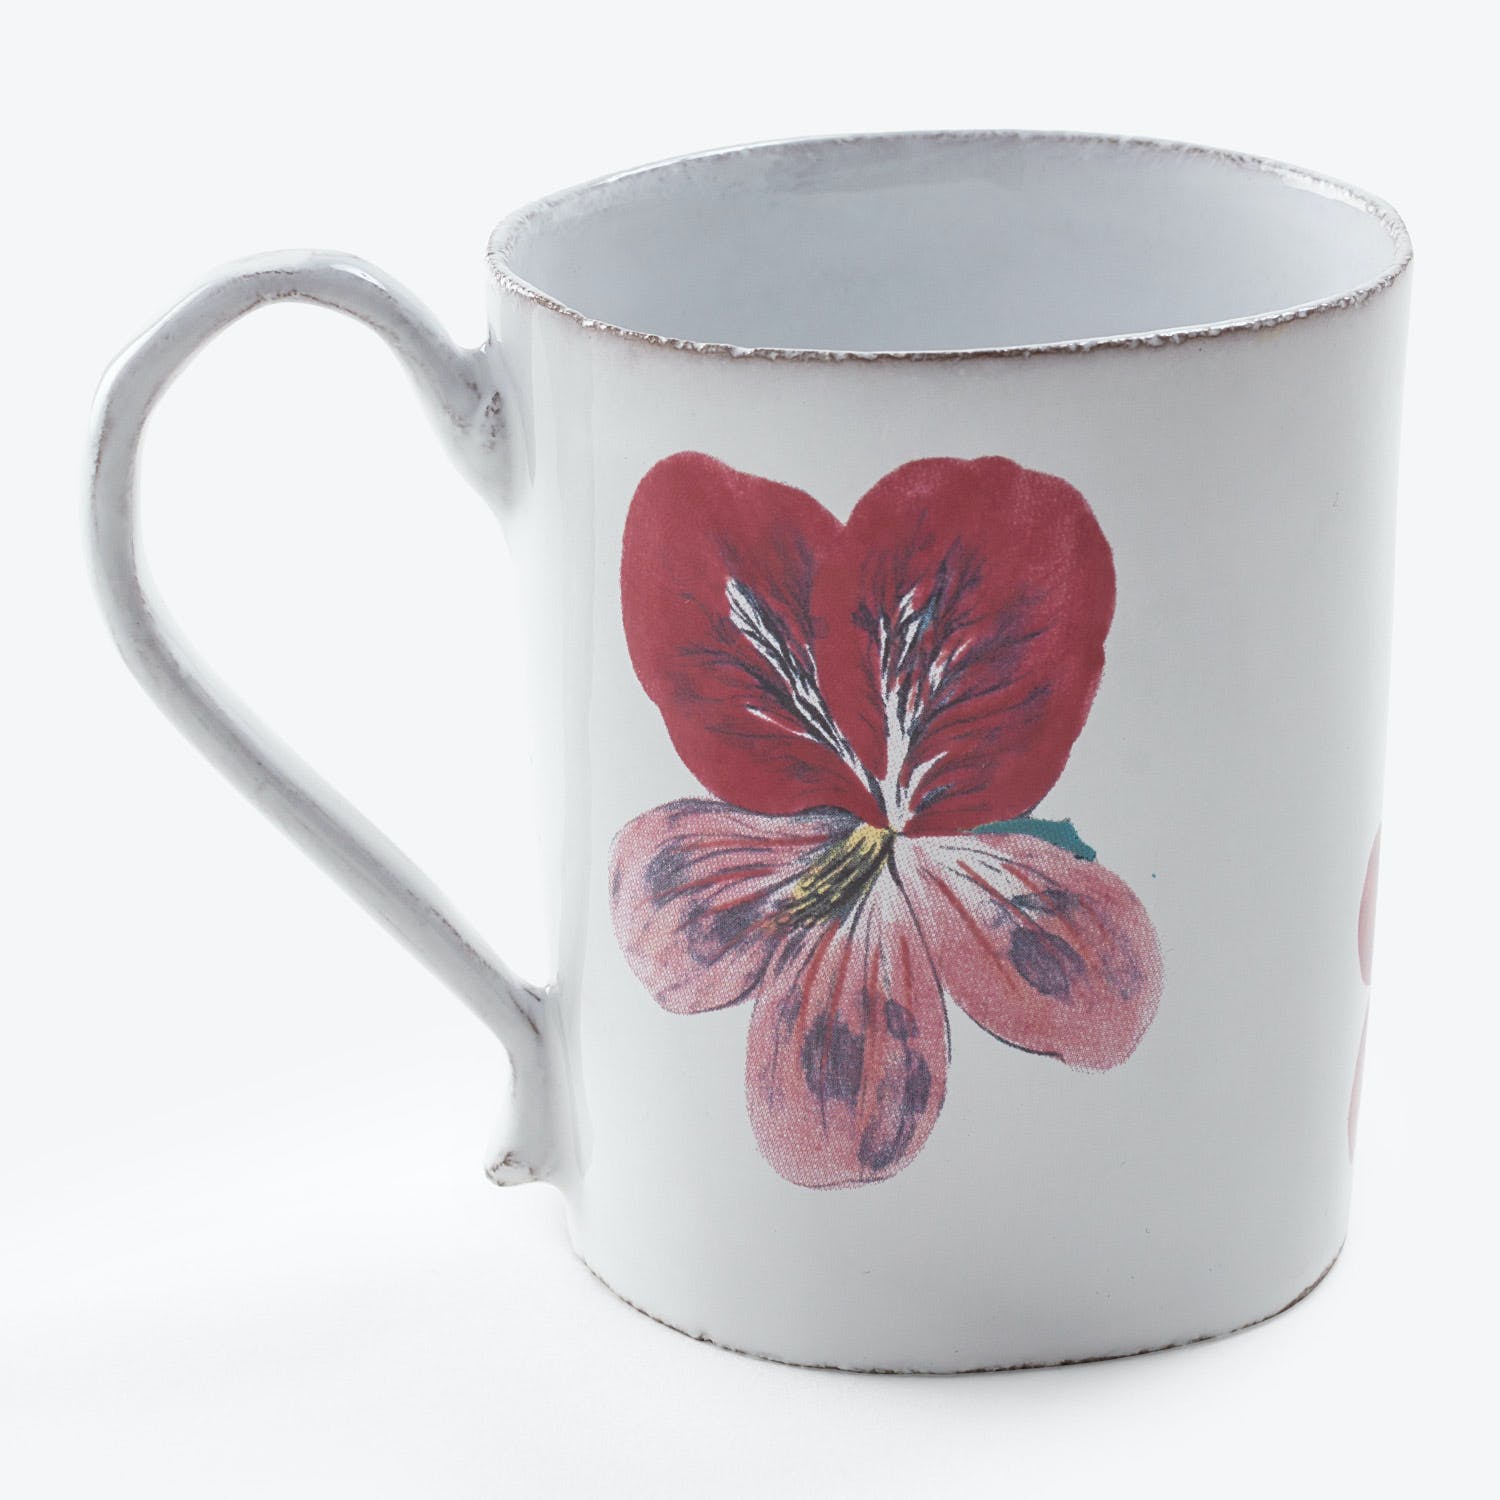 Vintage white enamel mug adorned with a vibrant red flower.